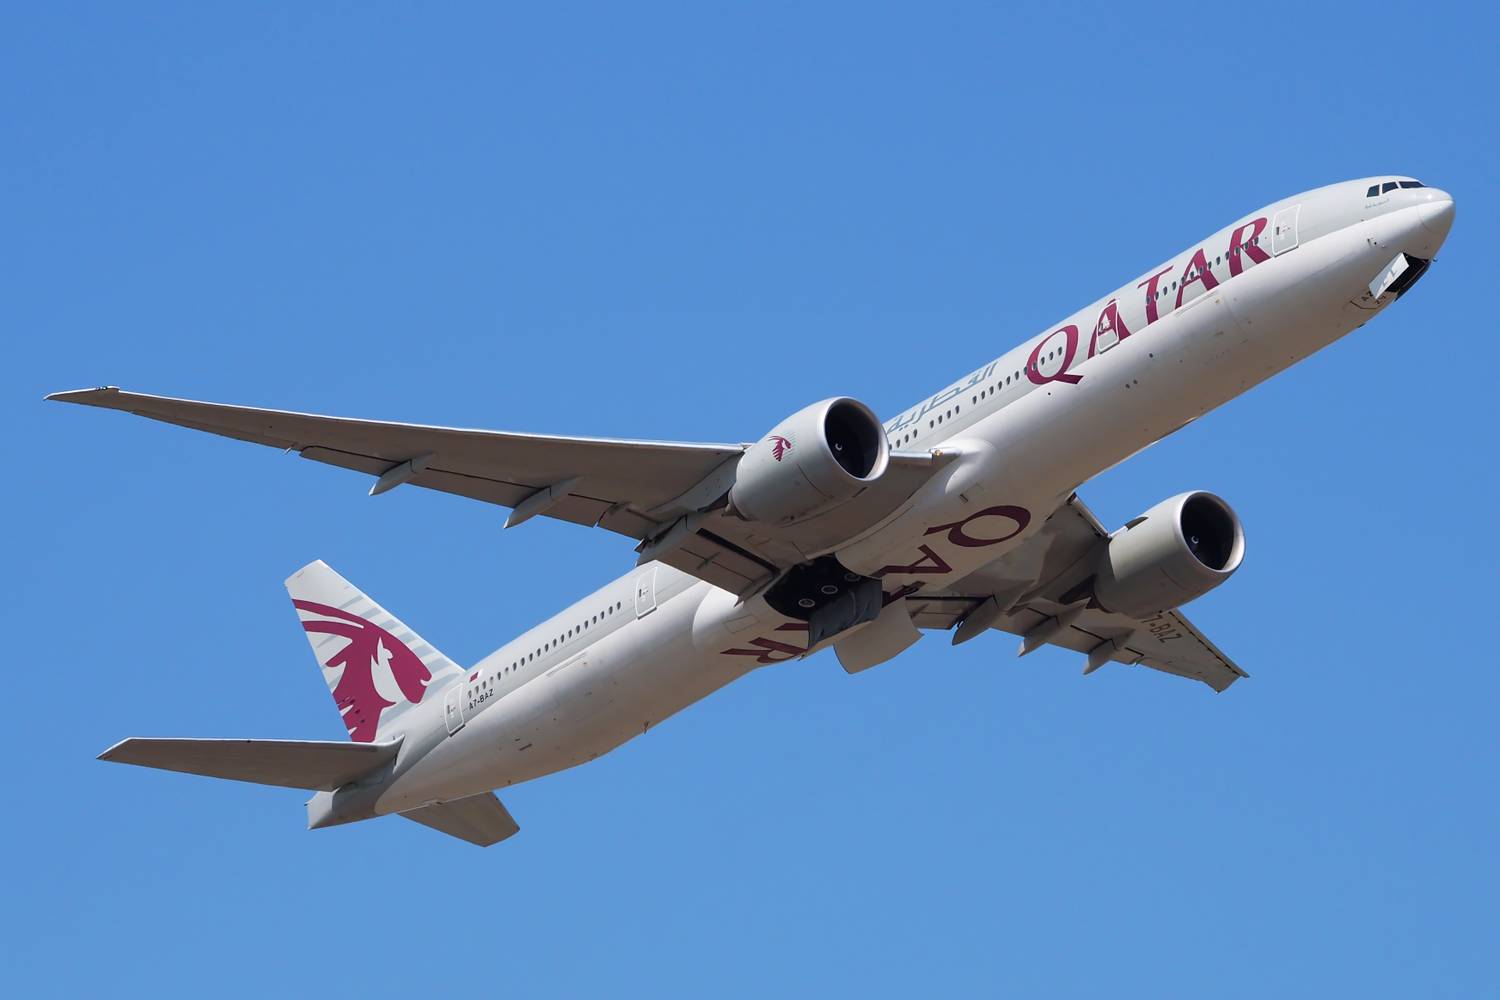 Qatar Airways Boeing 777-300ER departing Bangkok, Thailand